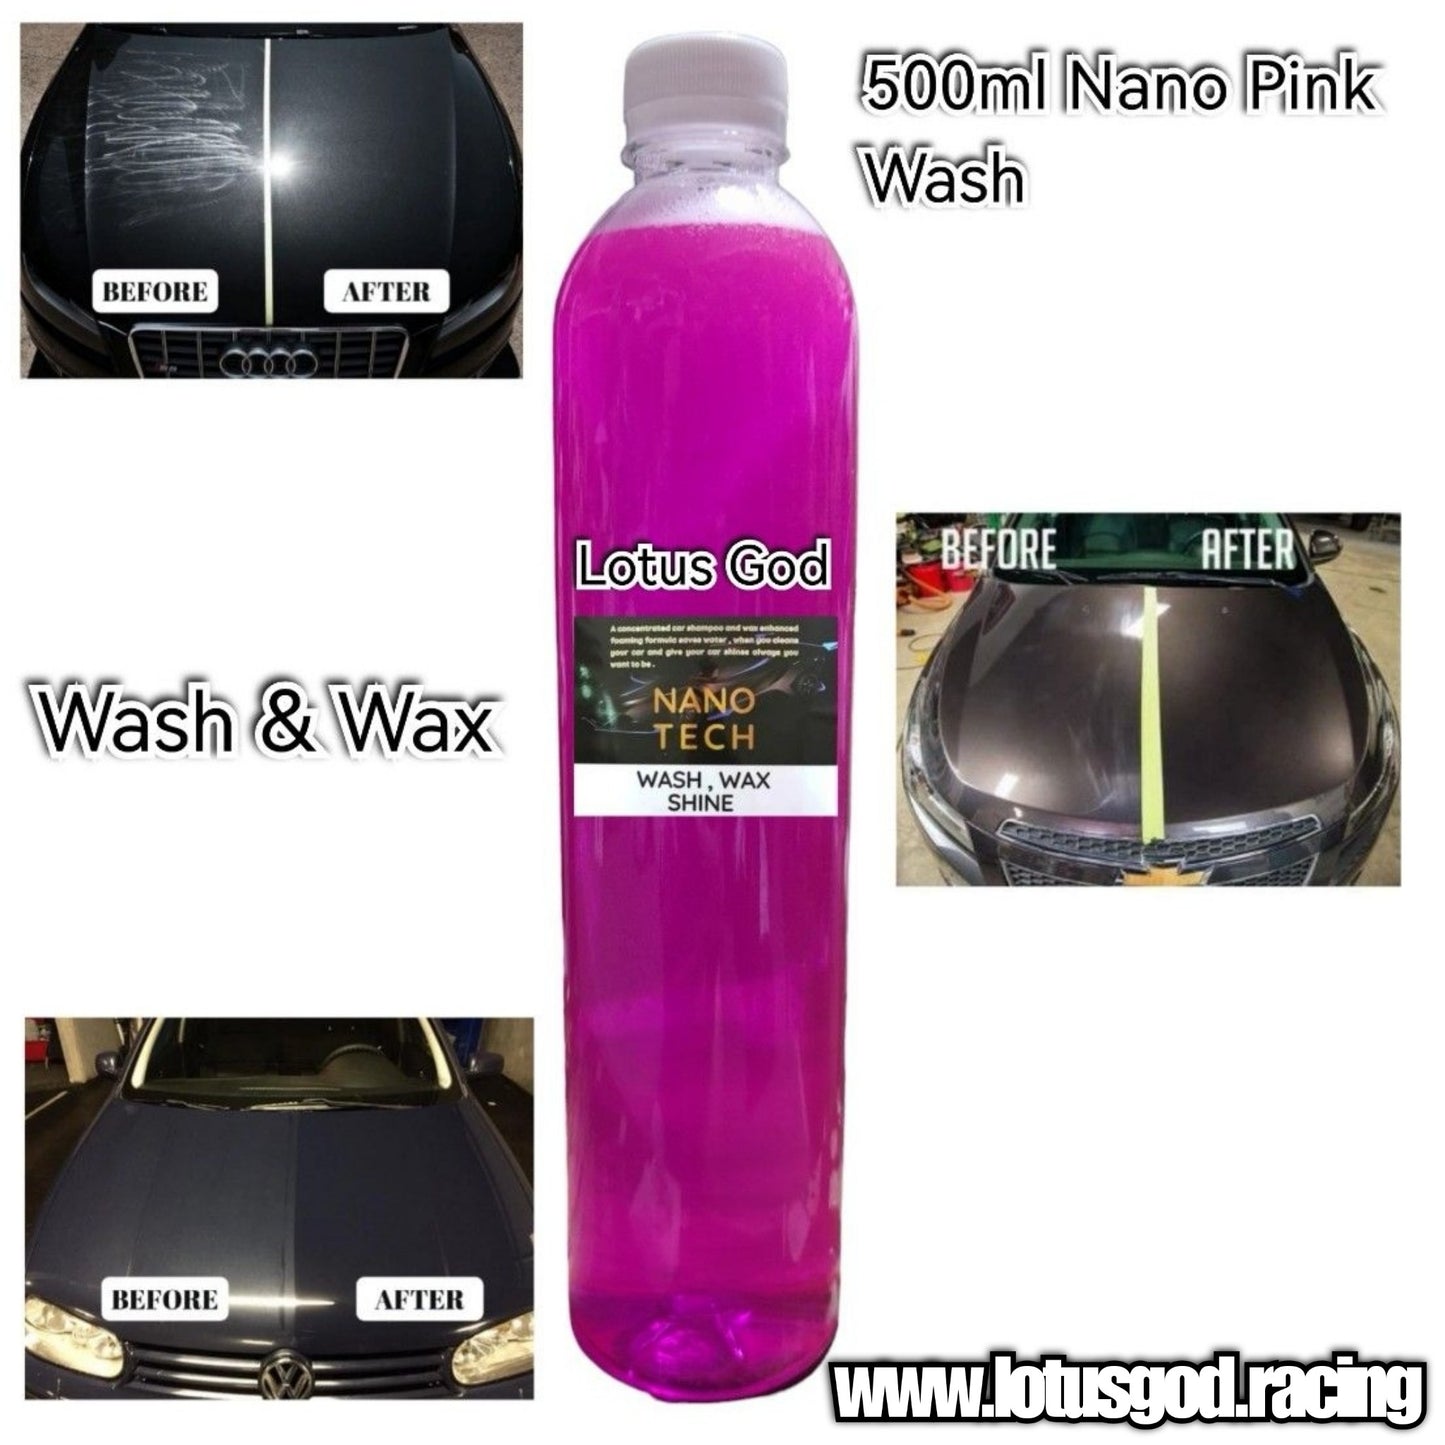 500ml Thick Pink Lady Nano Tech Wash + Wax & Shine Car Wash For Motorcycle Car Lorry Van Pick Up Etc